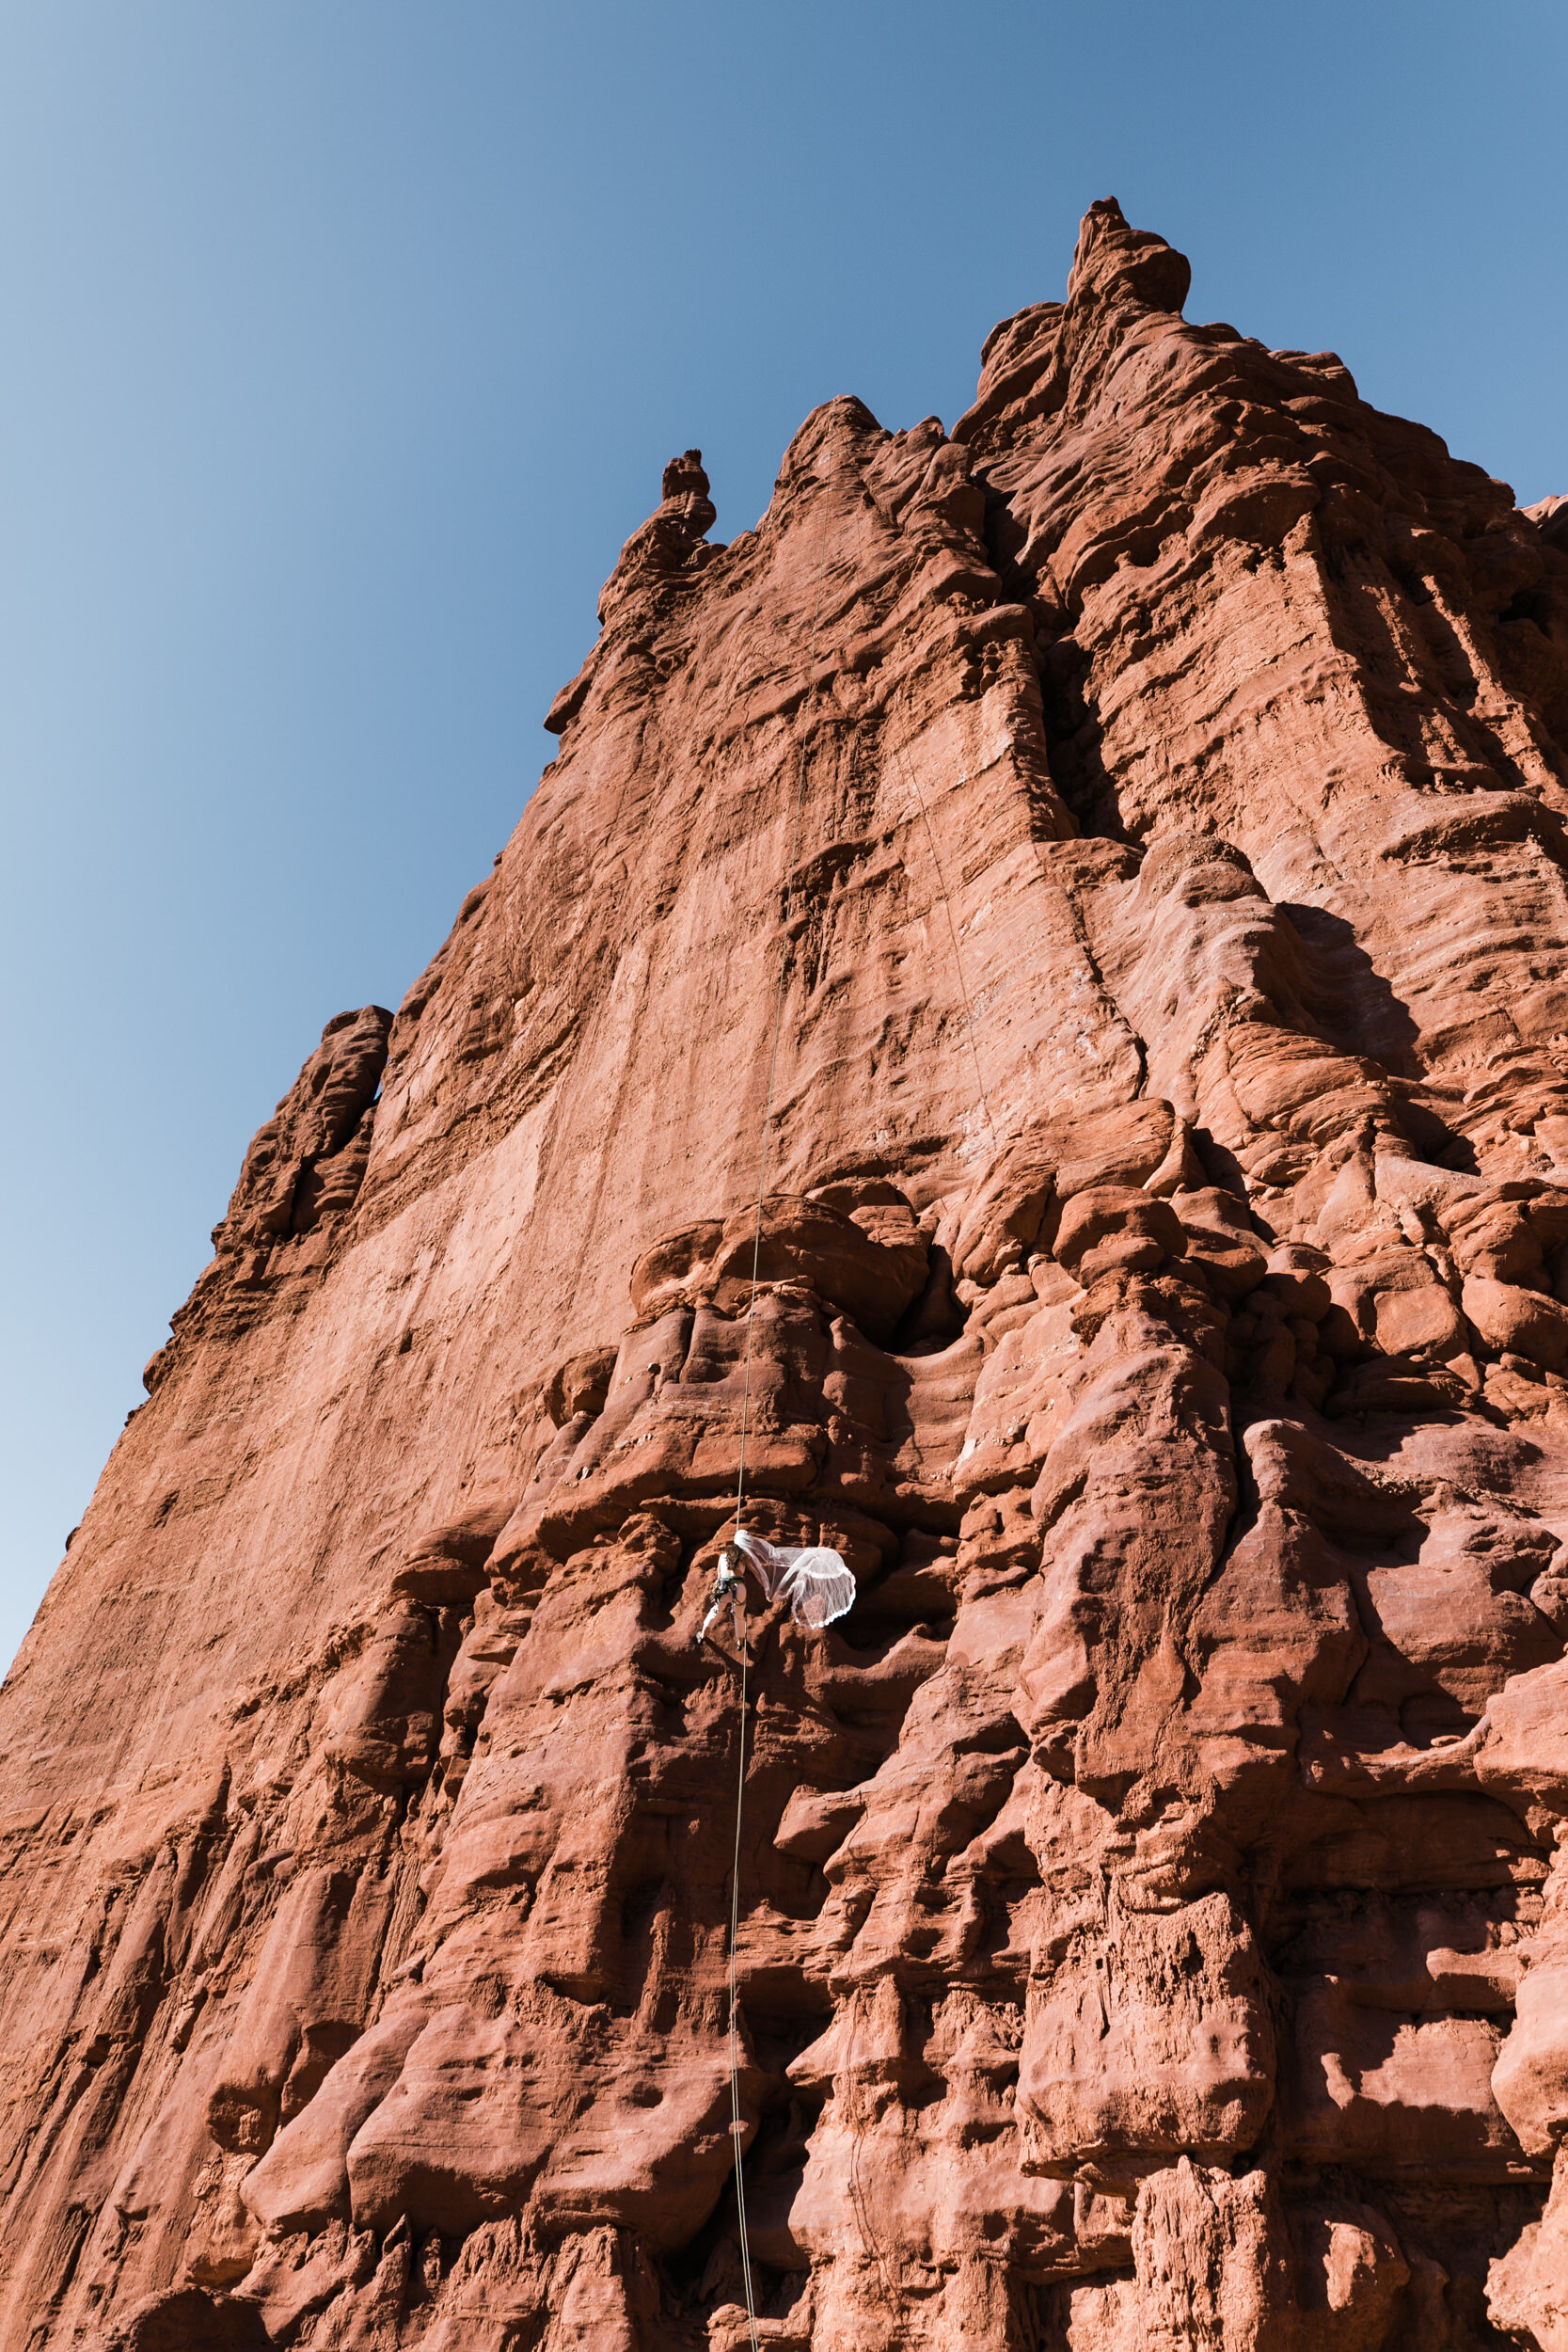 Rock Climbing wedding in Moab, Utah | Desert tower elopement | The Hearnes Adventure Photography